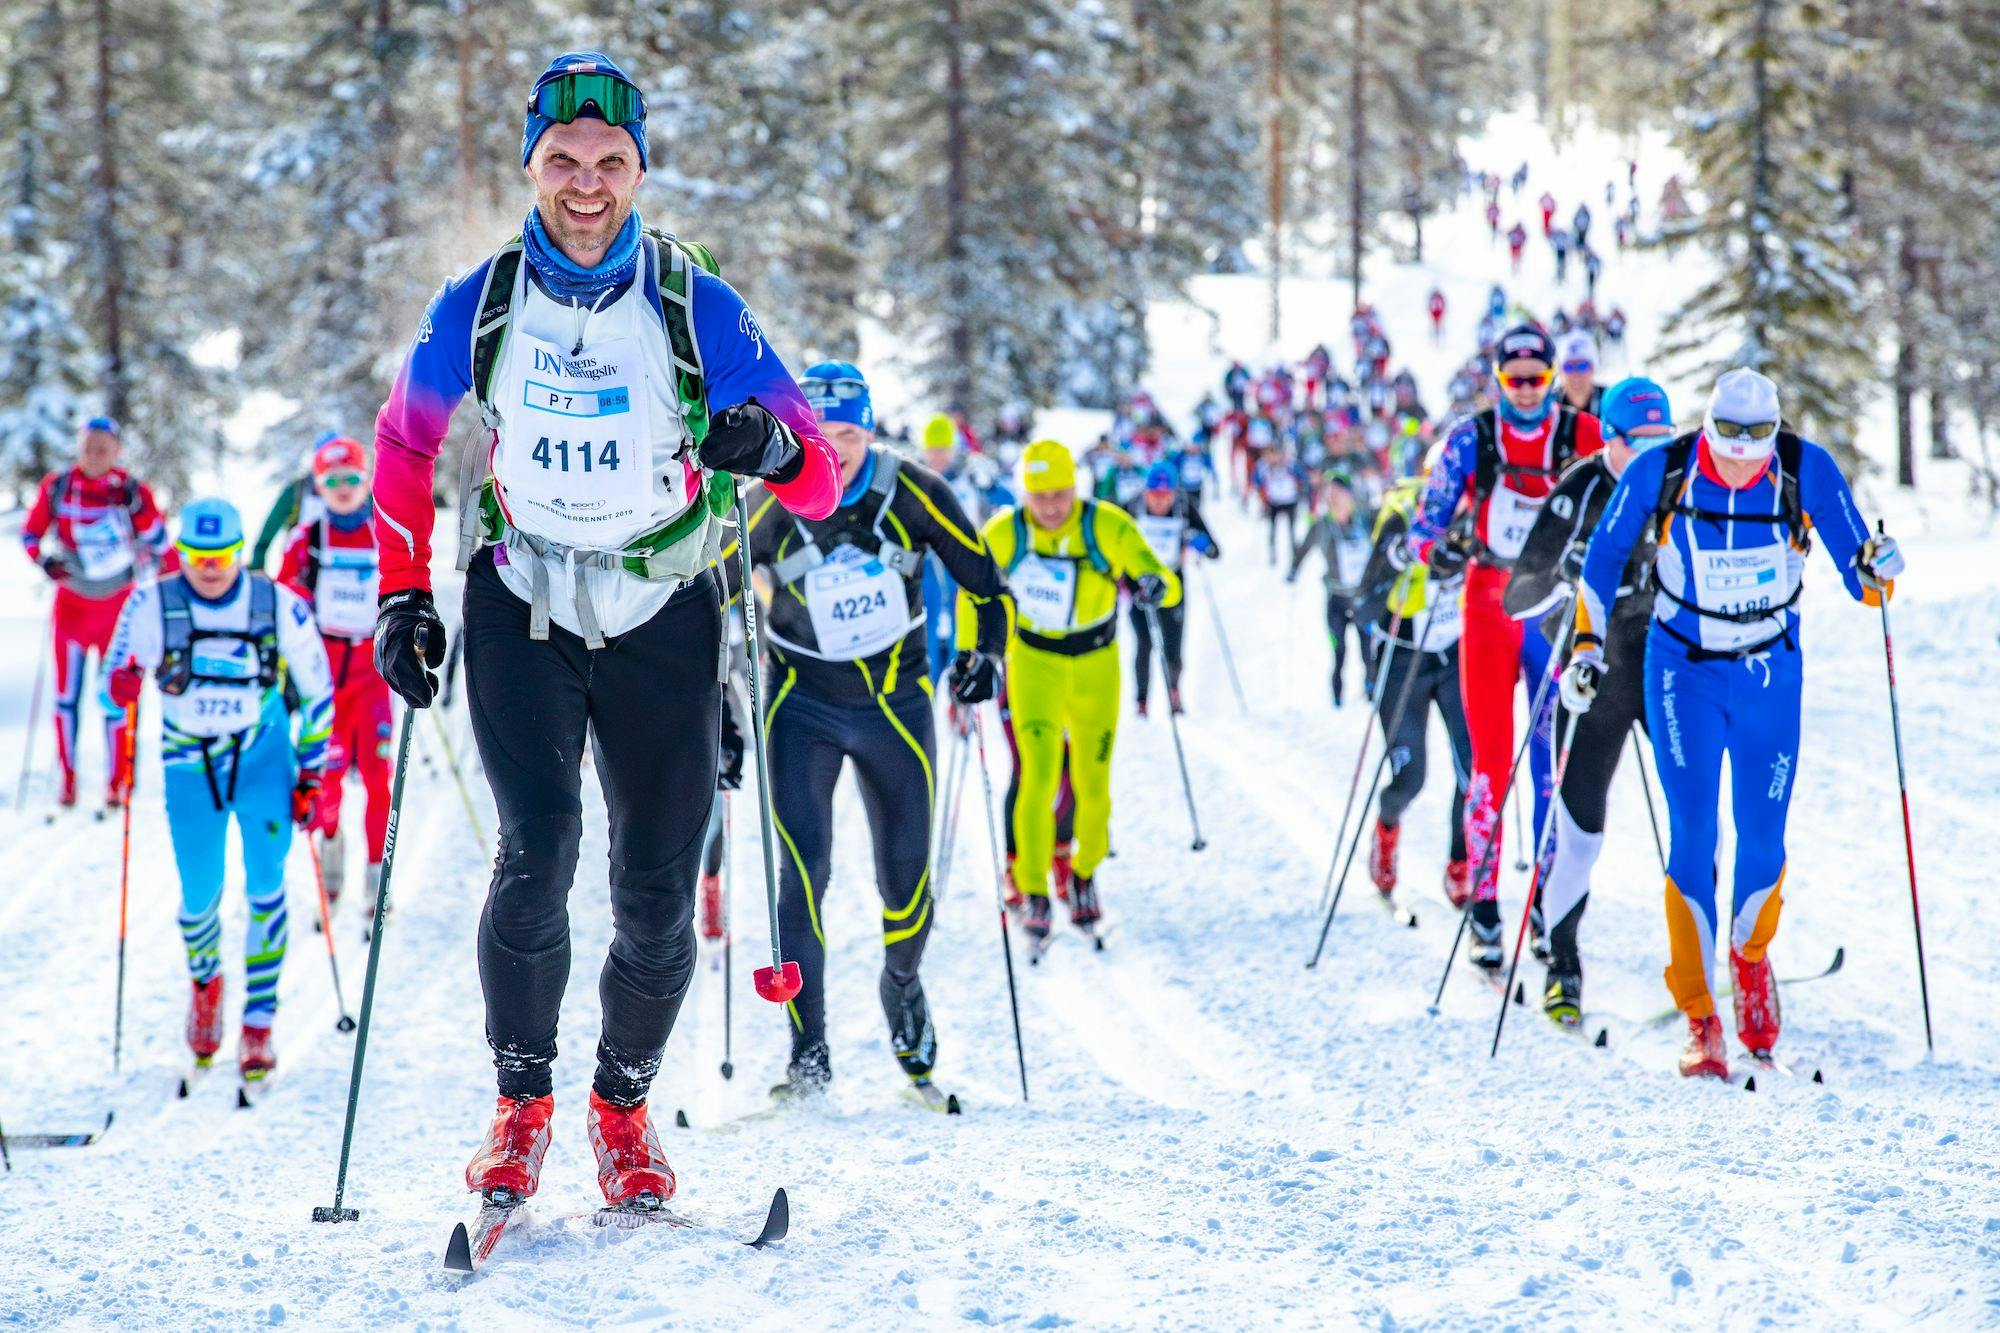 A Ski Race in Norway